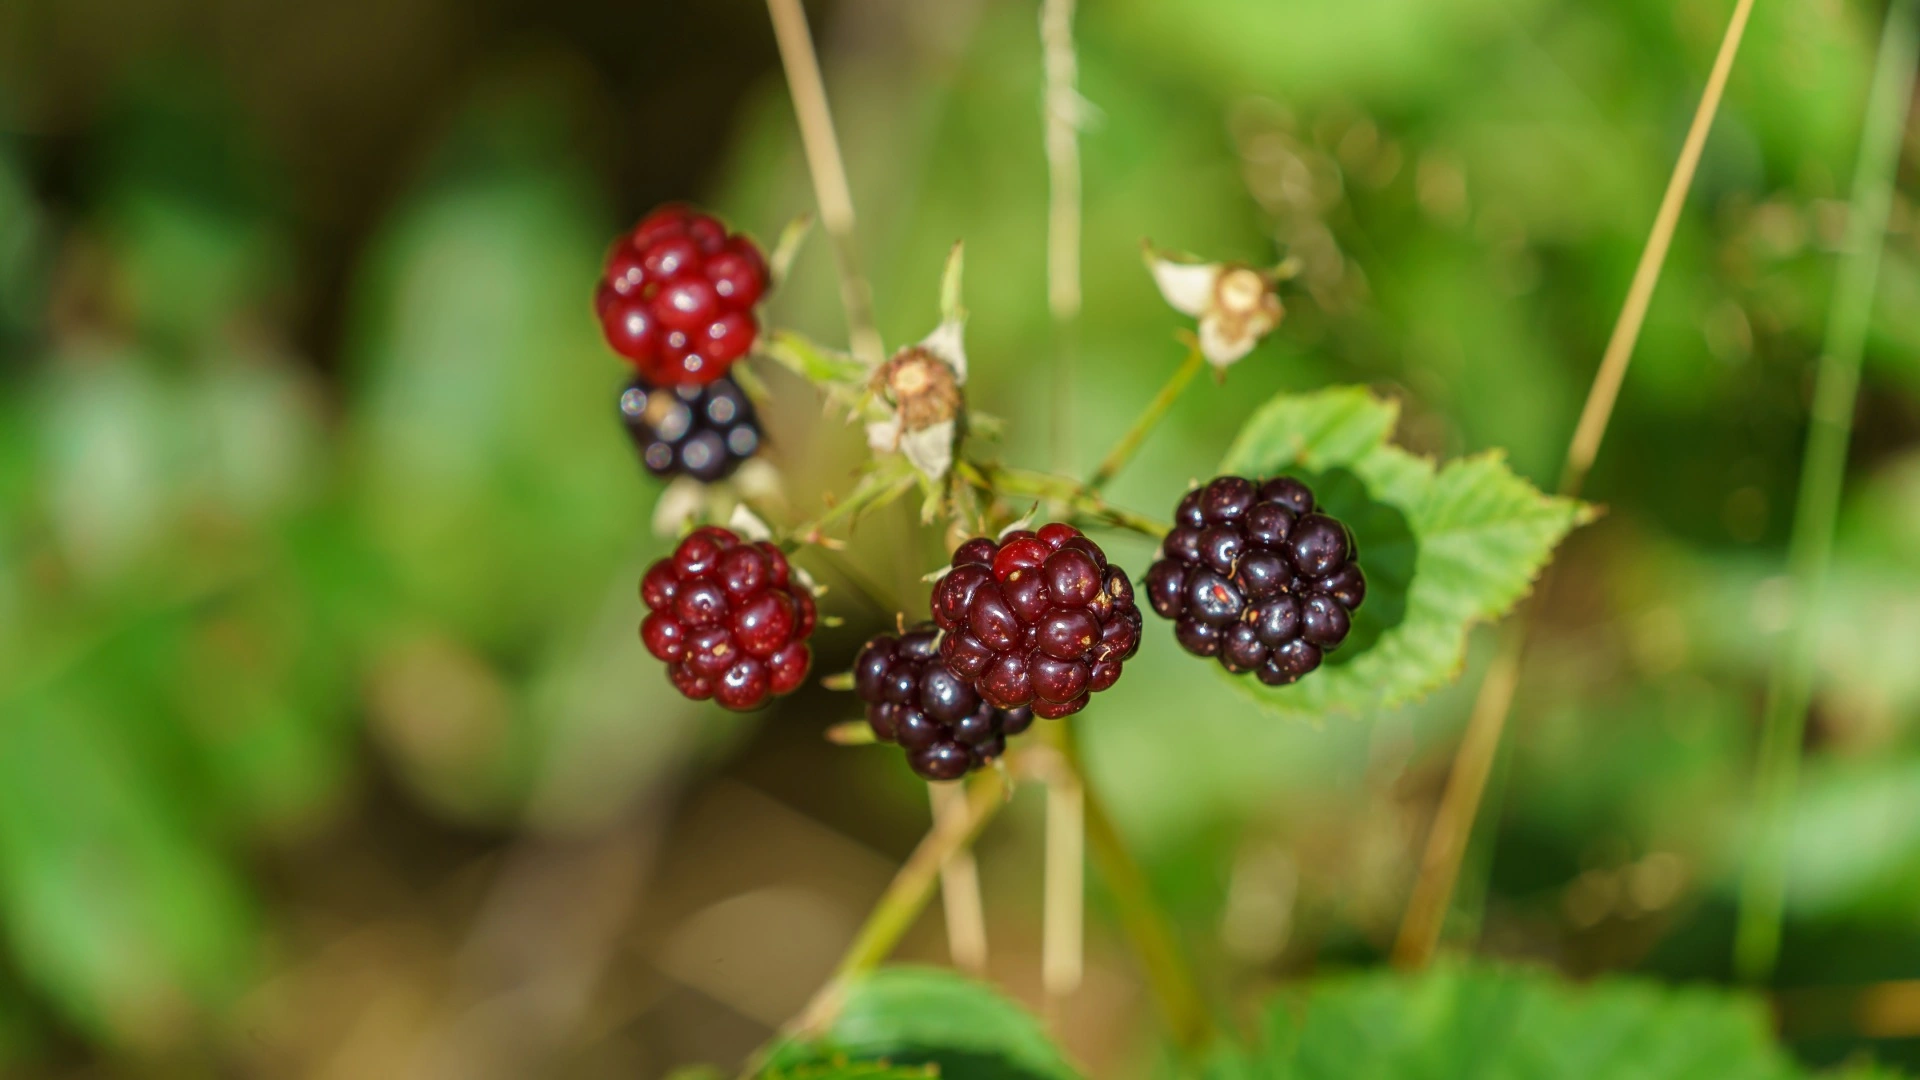 Invasive Weeds: Himalayan Blackberry and Evergreen Blackberry